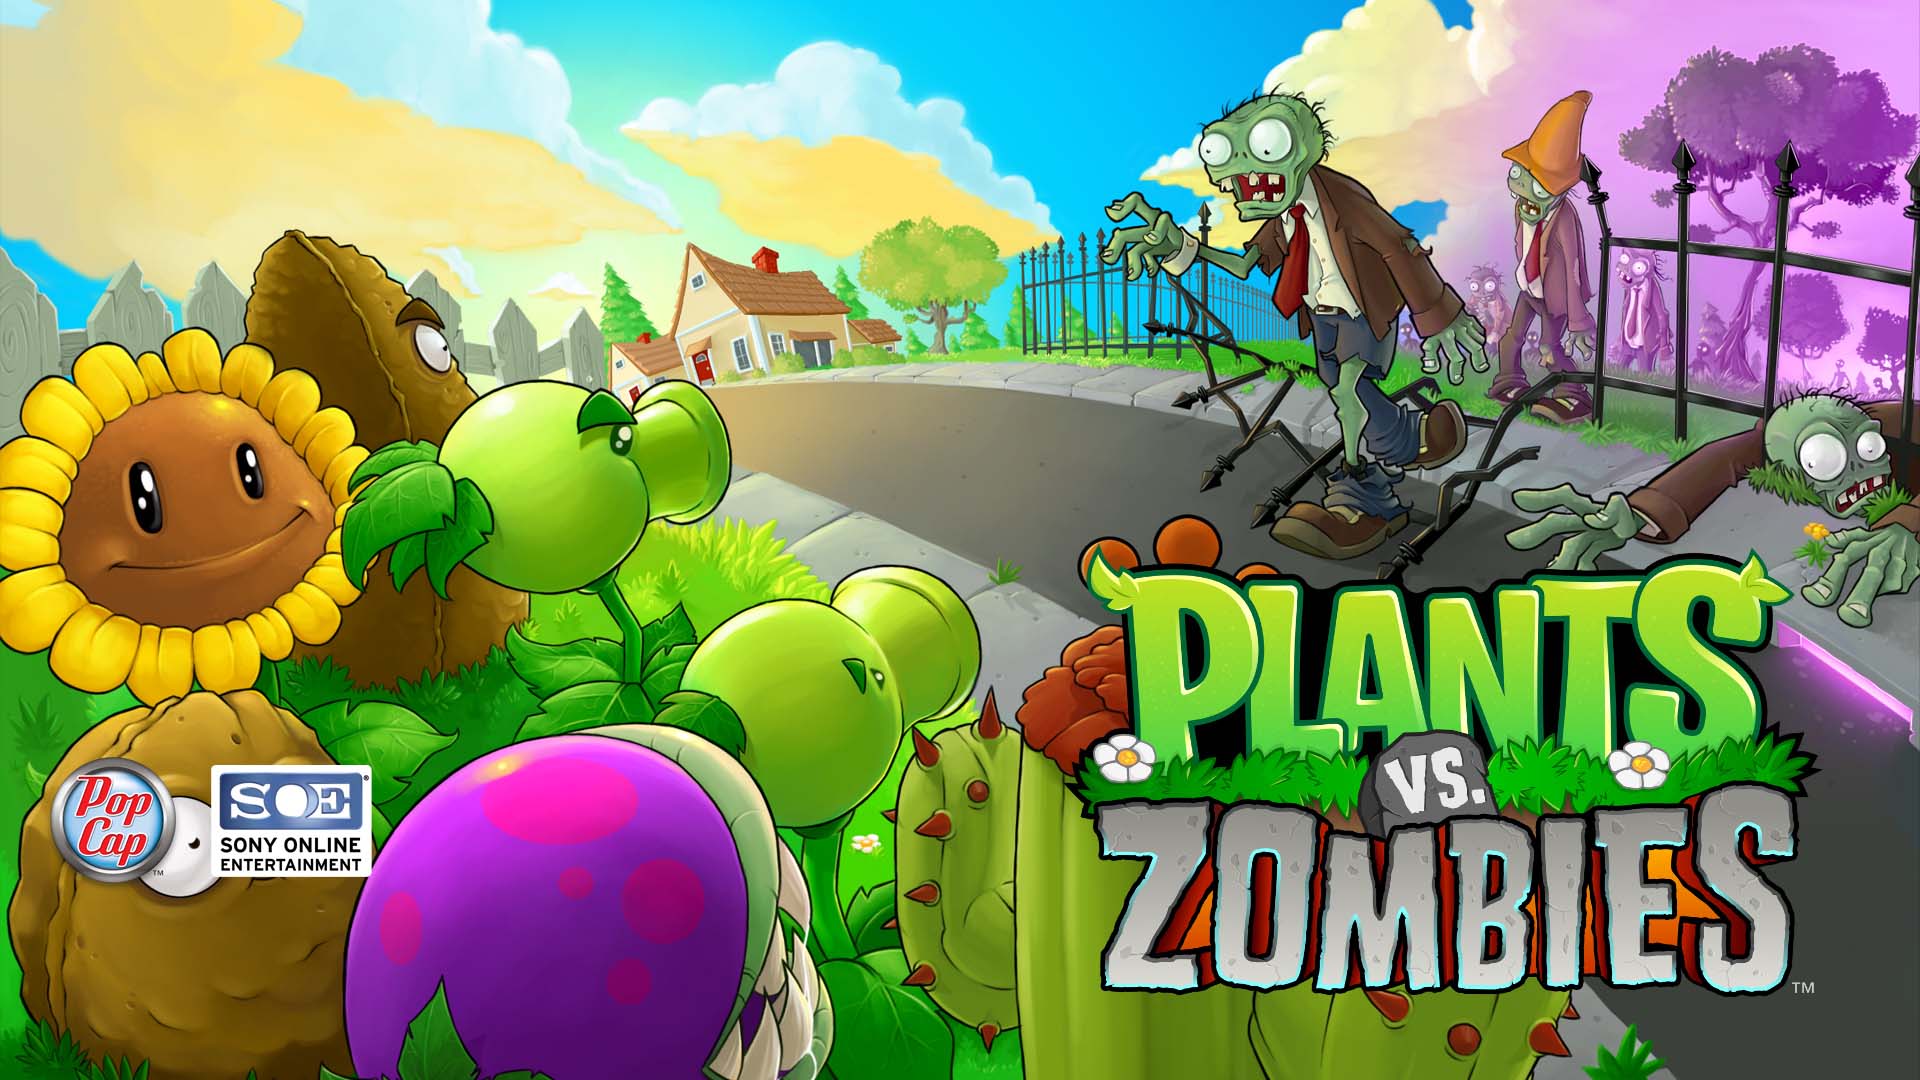 plantes vs zombies fond d'écran,jeu d'aventure d'action,dessin animé,jeu pc,dessin animé,jeux